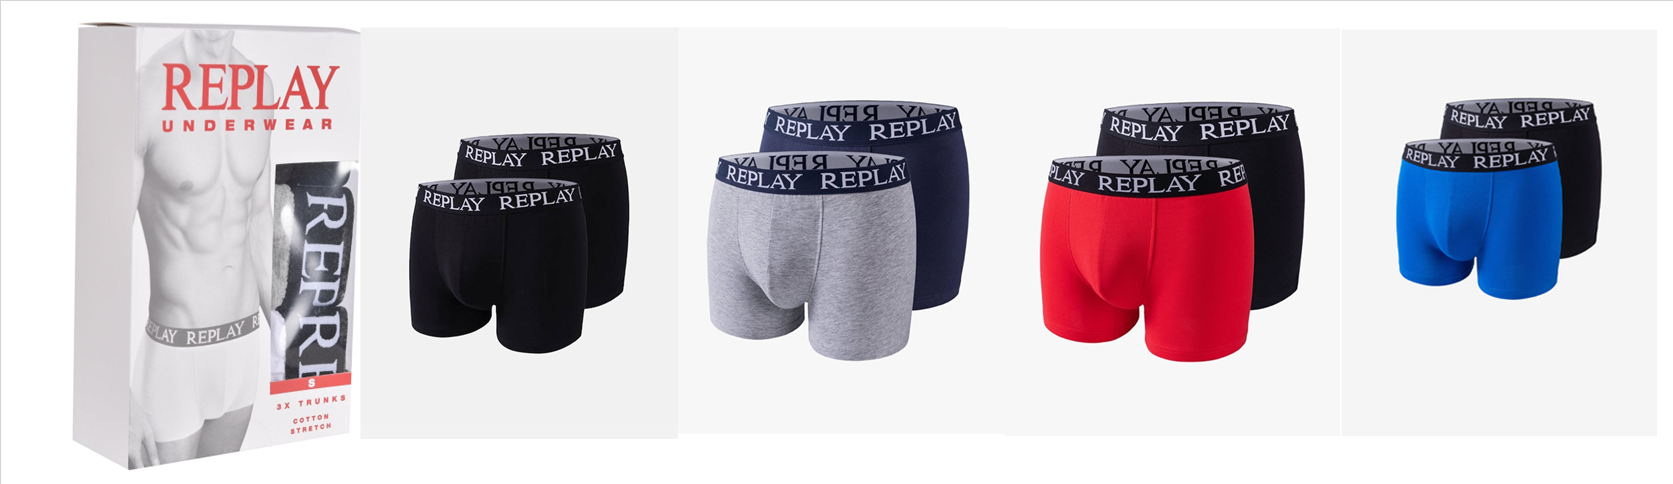 47840 - REPLAY Men's underwear Clearance Europe